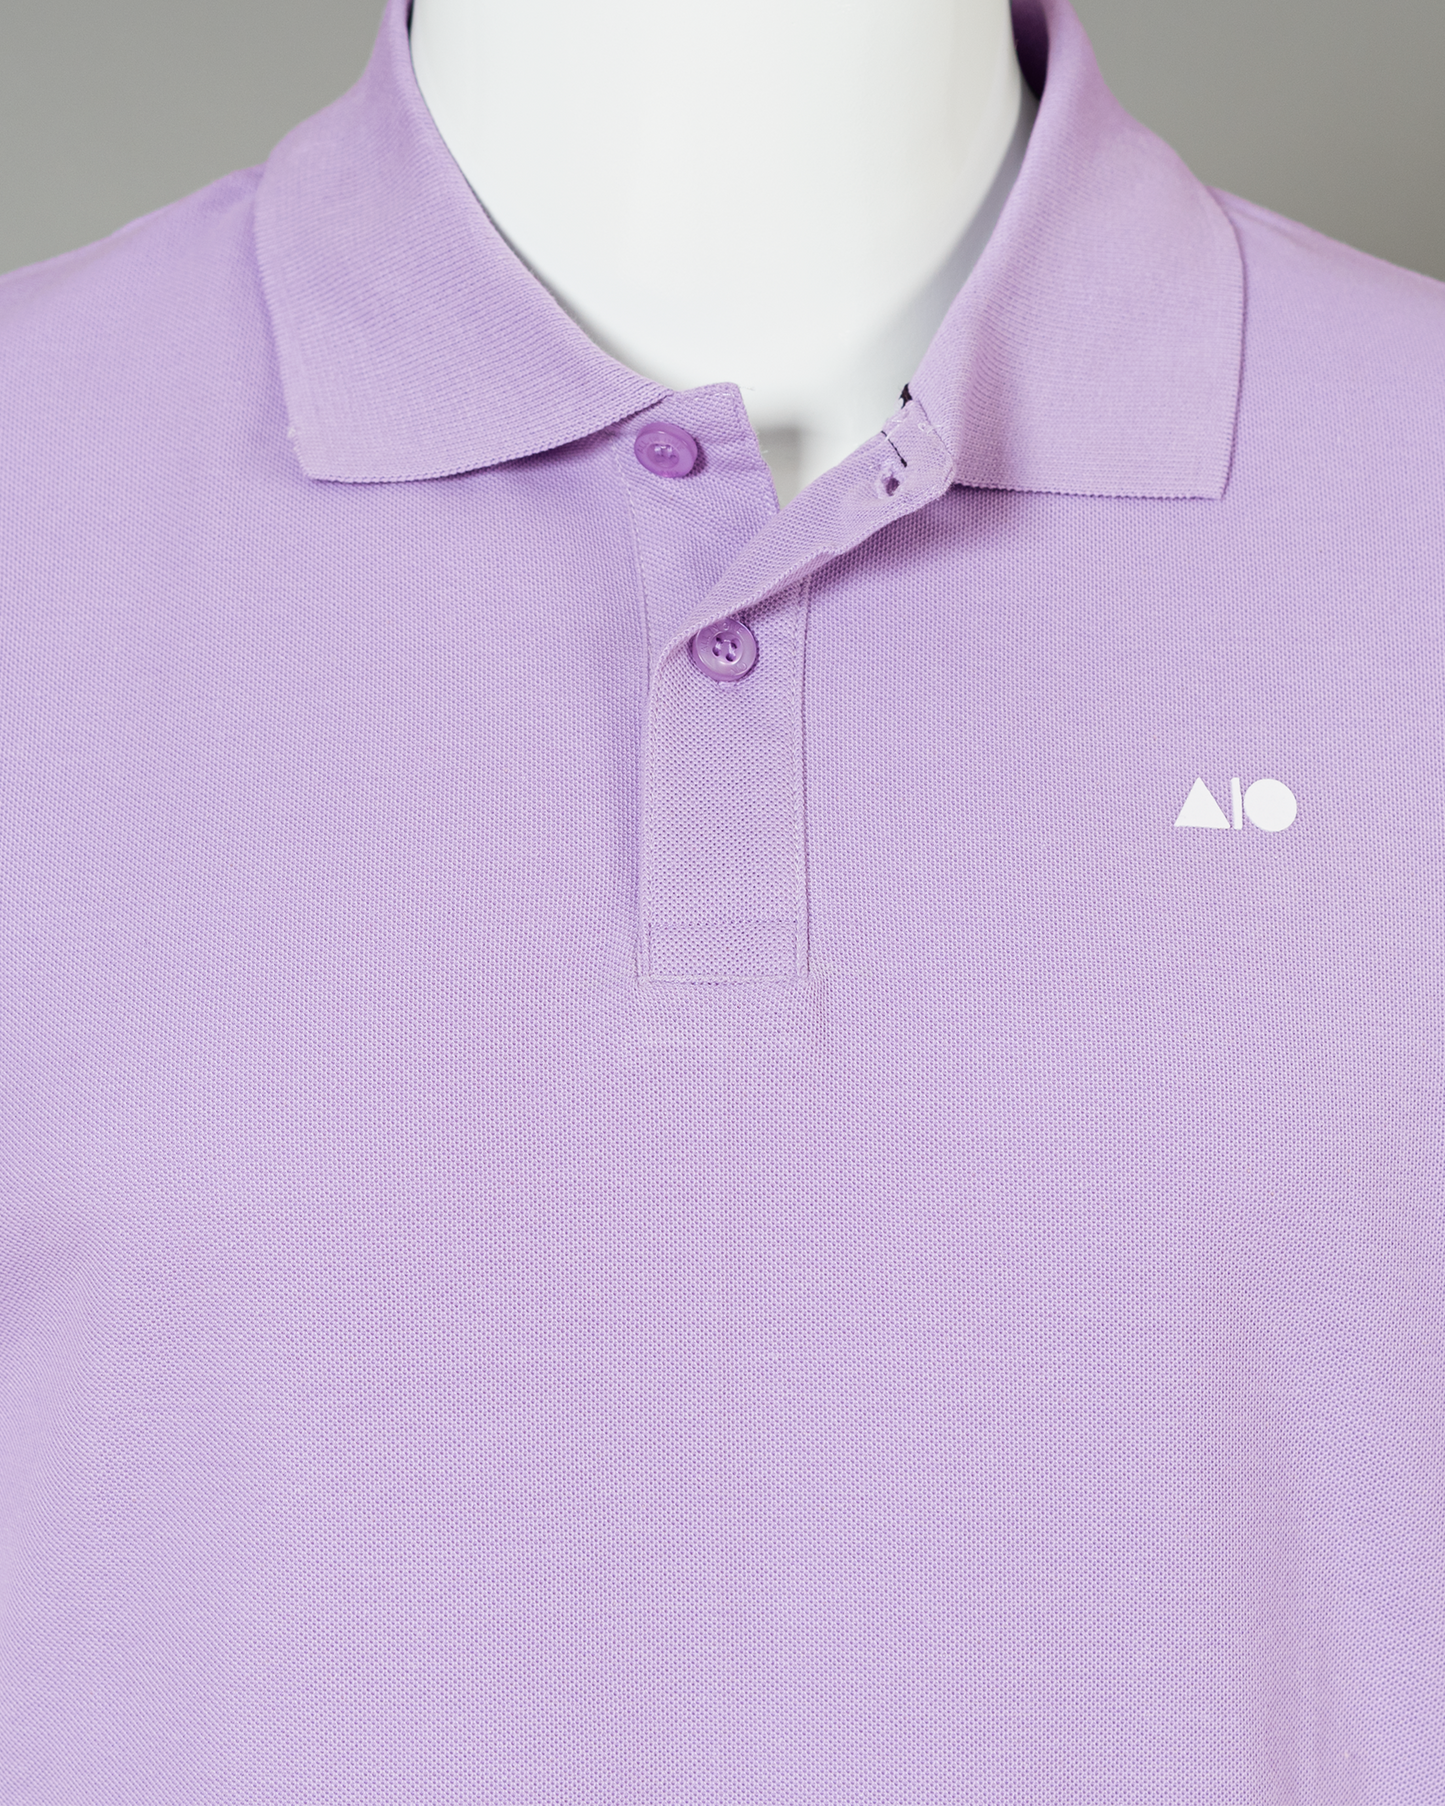 Mens Basic Polo Shirt - Combo (Chalk Pink, Teal Blue & Purple Rose)